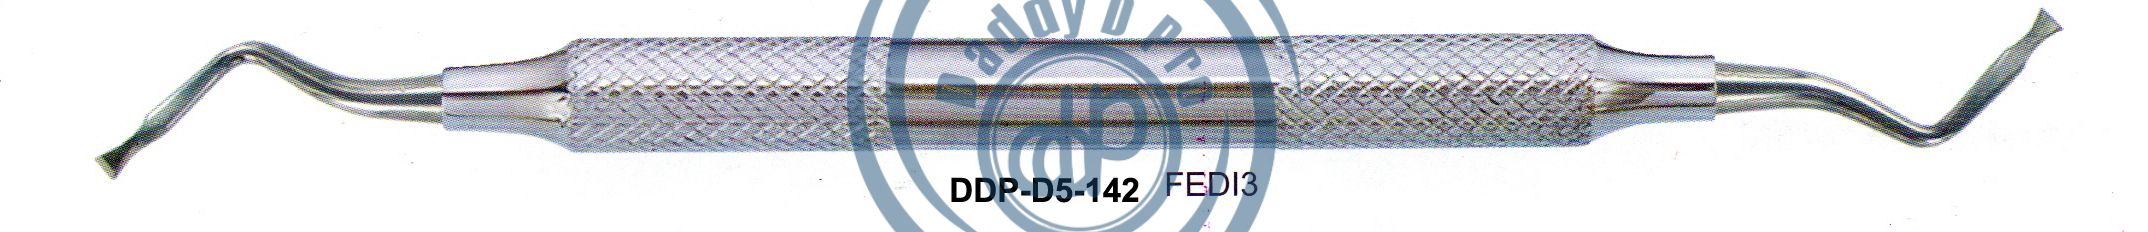 images/DDP-D5-142.png